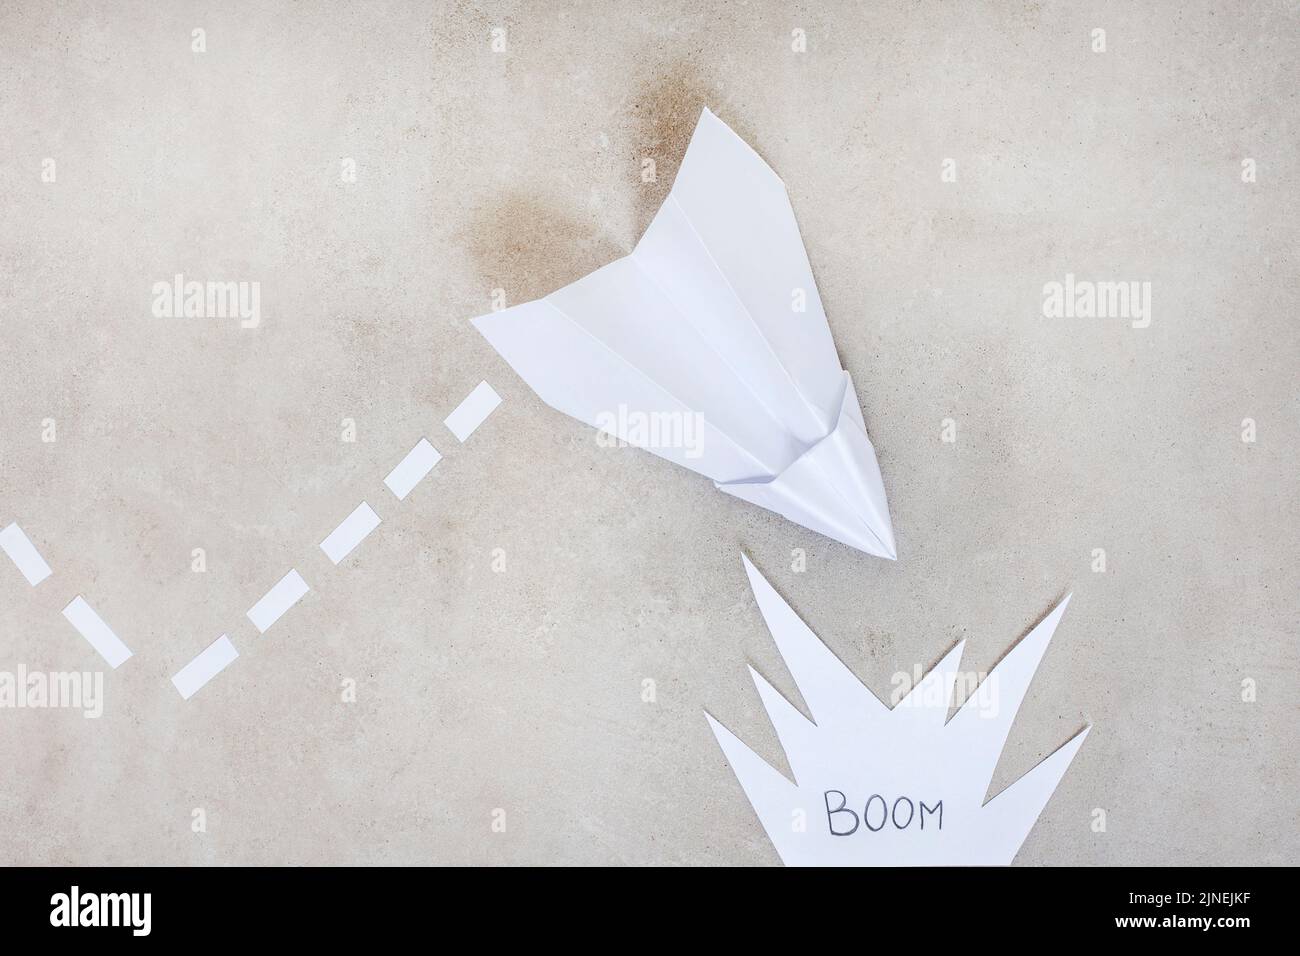 Avión de papel como metáfora, rumbo a un accidente o explosión, en gris con espacio de copia Foto de stock